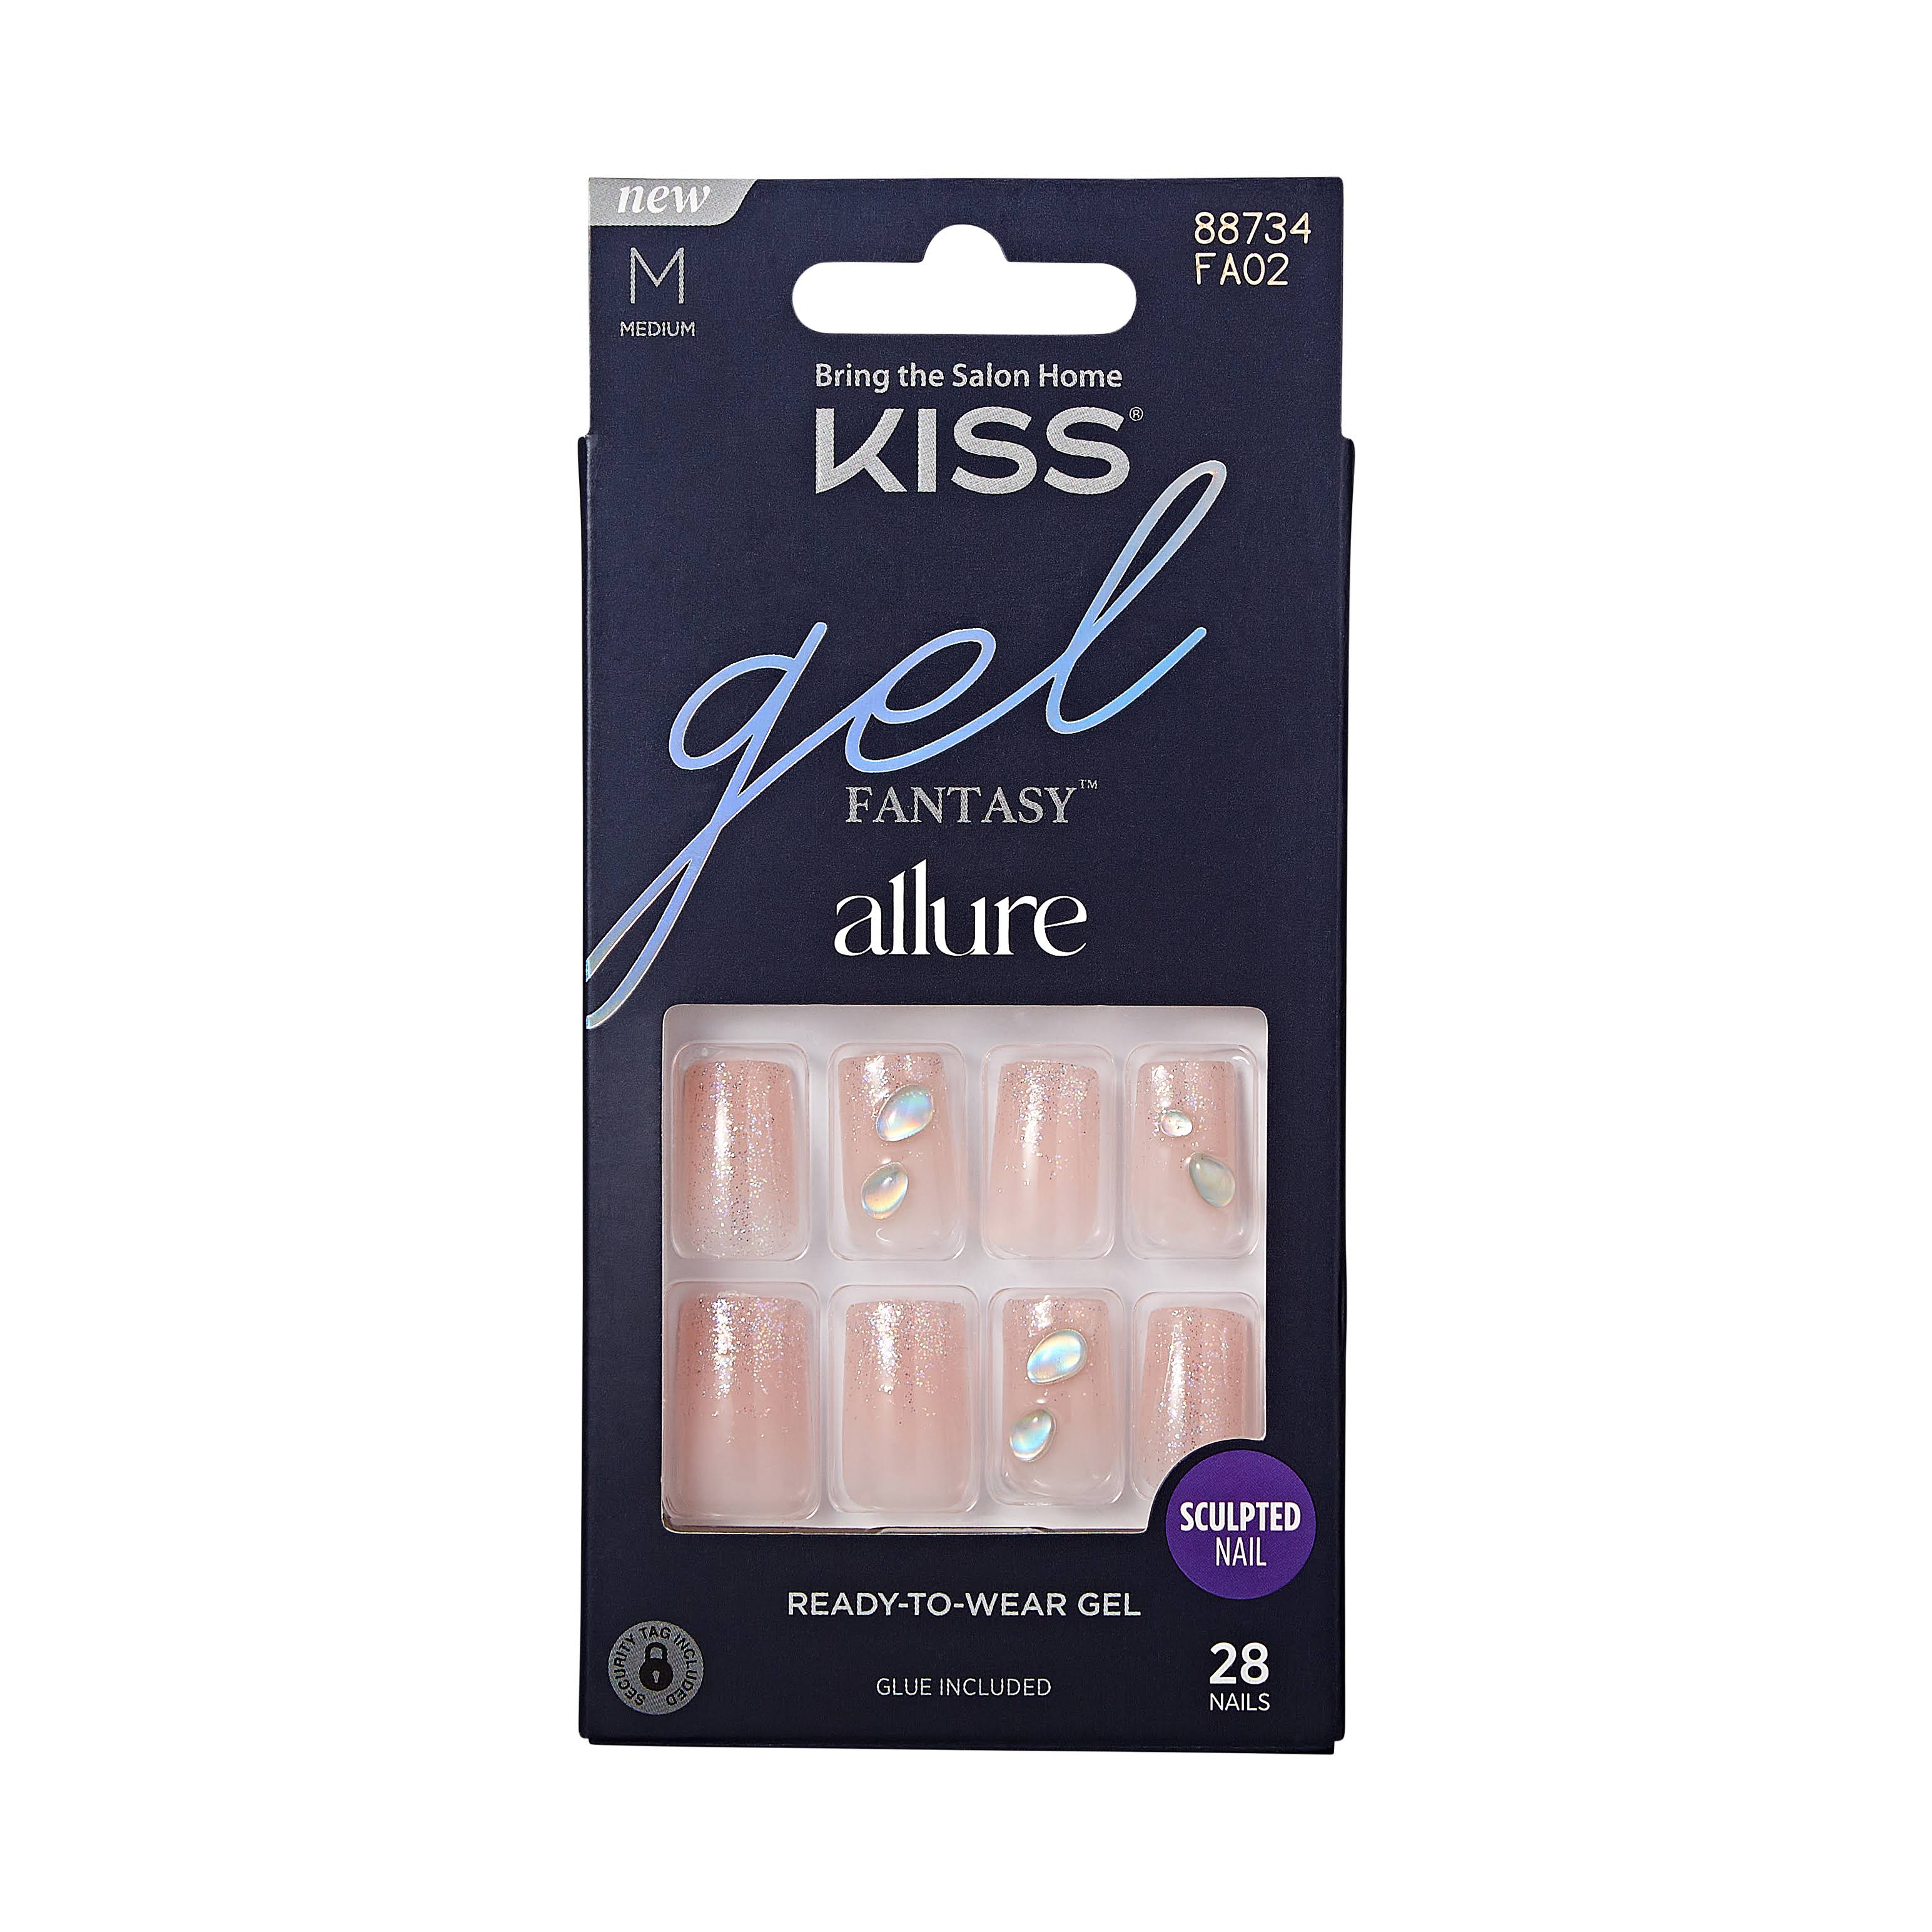 Kiss Gel Fantasy Allure Nails - Transformation